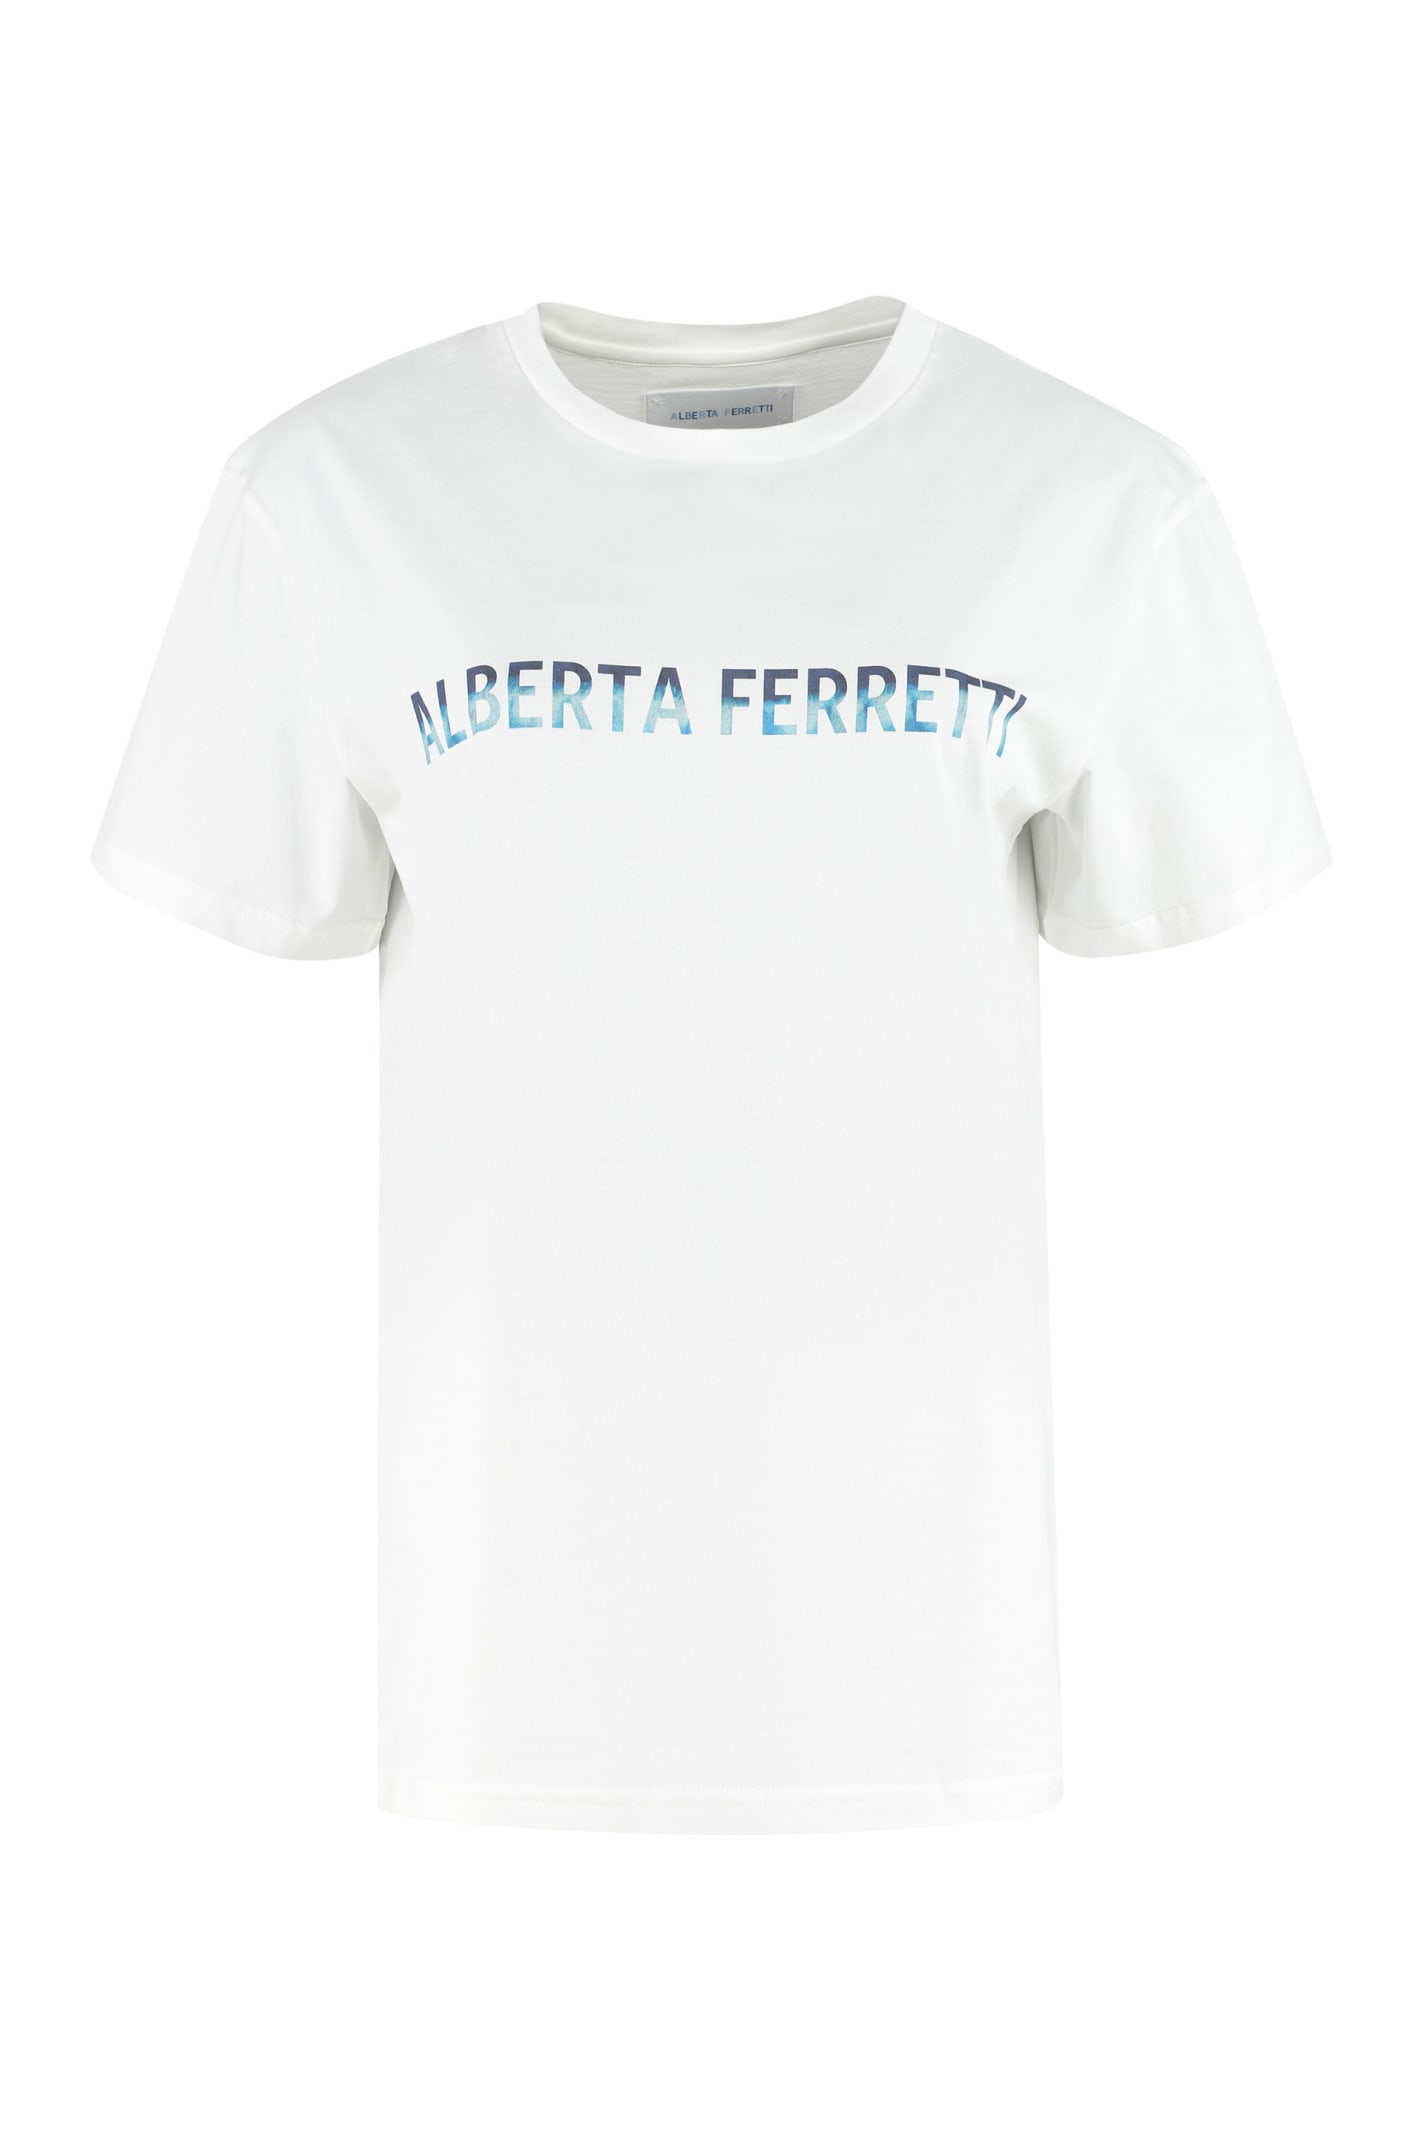 Alberta Ferretti T-shirts LOGO COTTON T-SHIRT